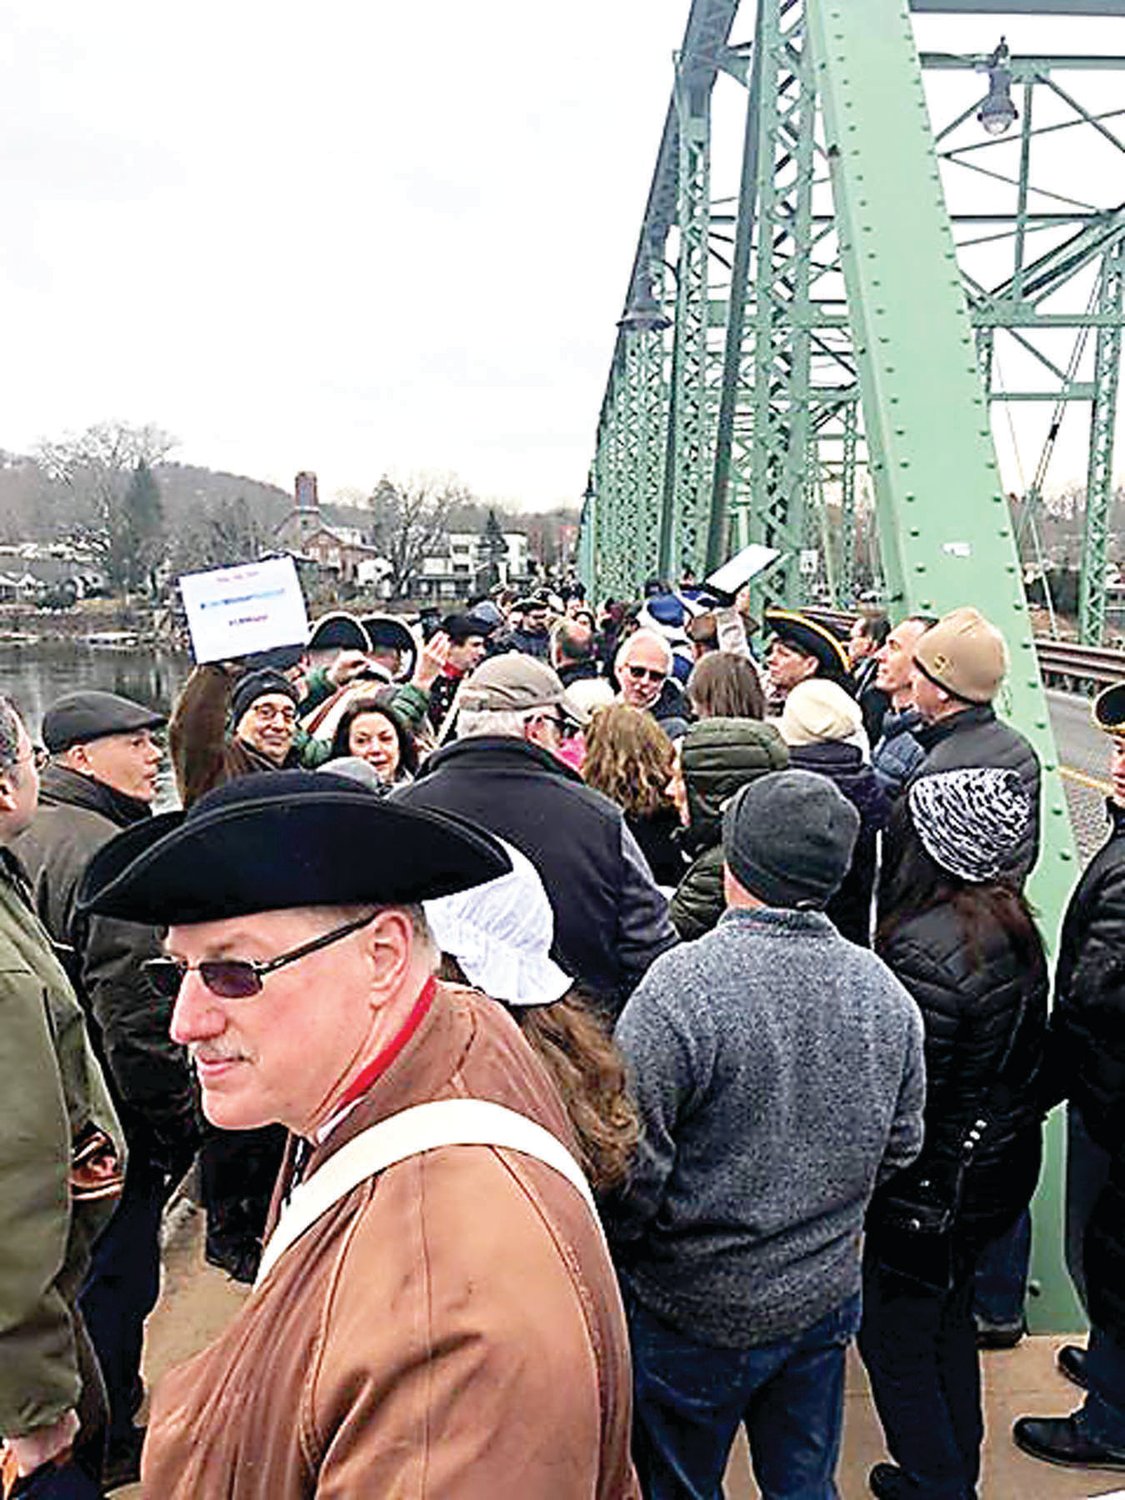 Pub crawl participants gather at Lambertville-New Hope free bridge. Photograph by Jen Samuel.